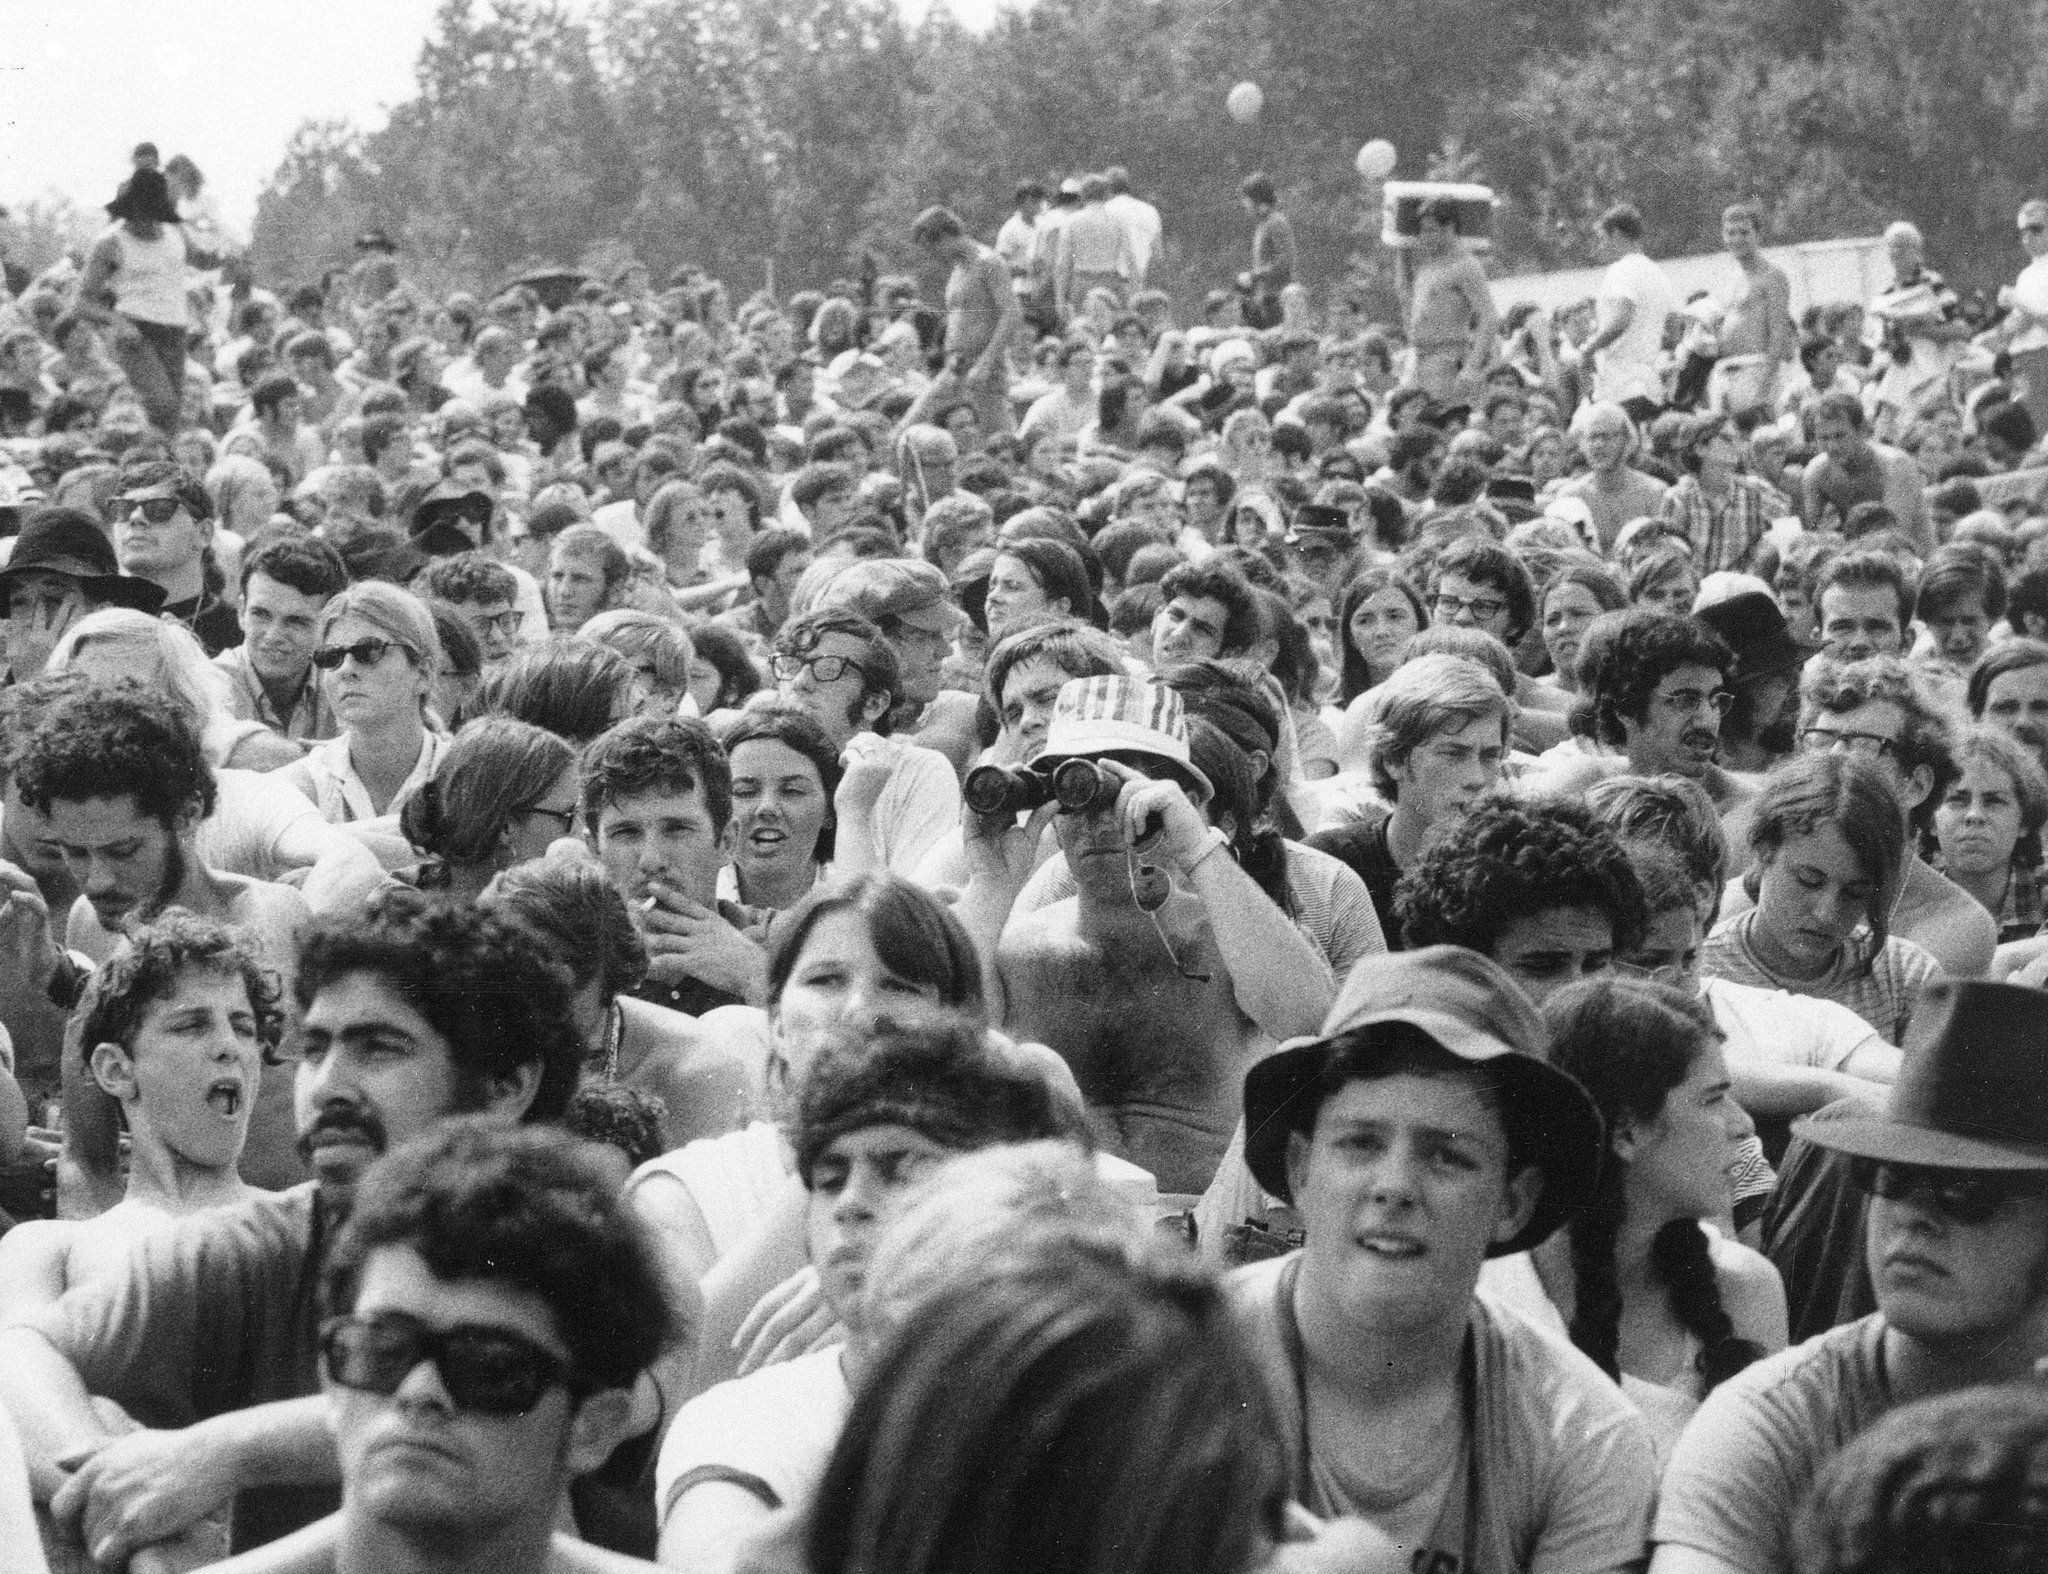 Woodstock was hellish. Or heavenly